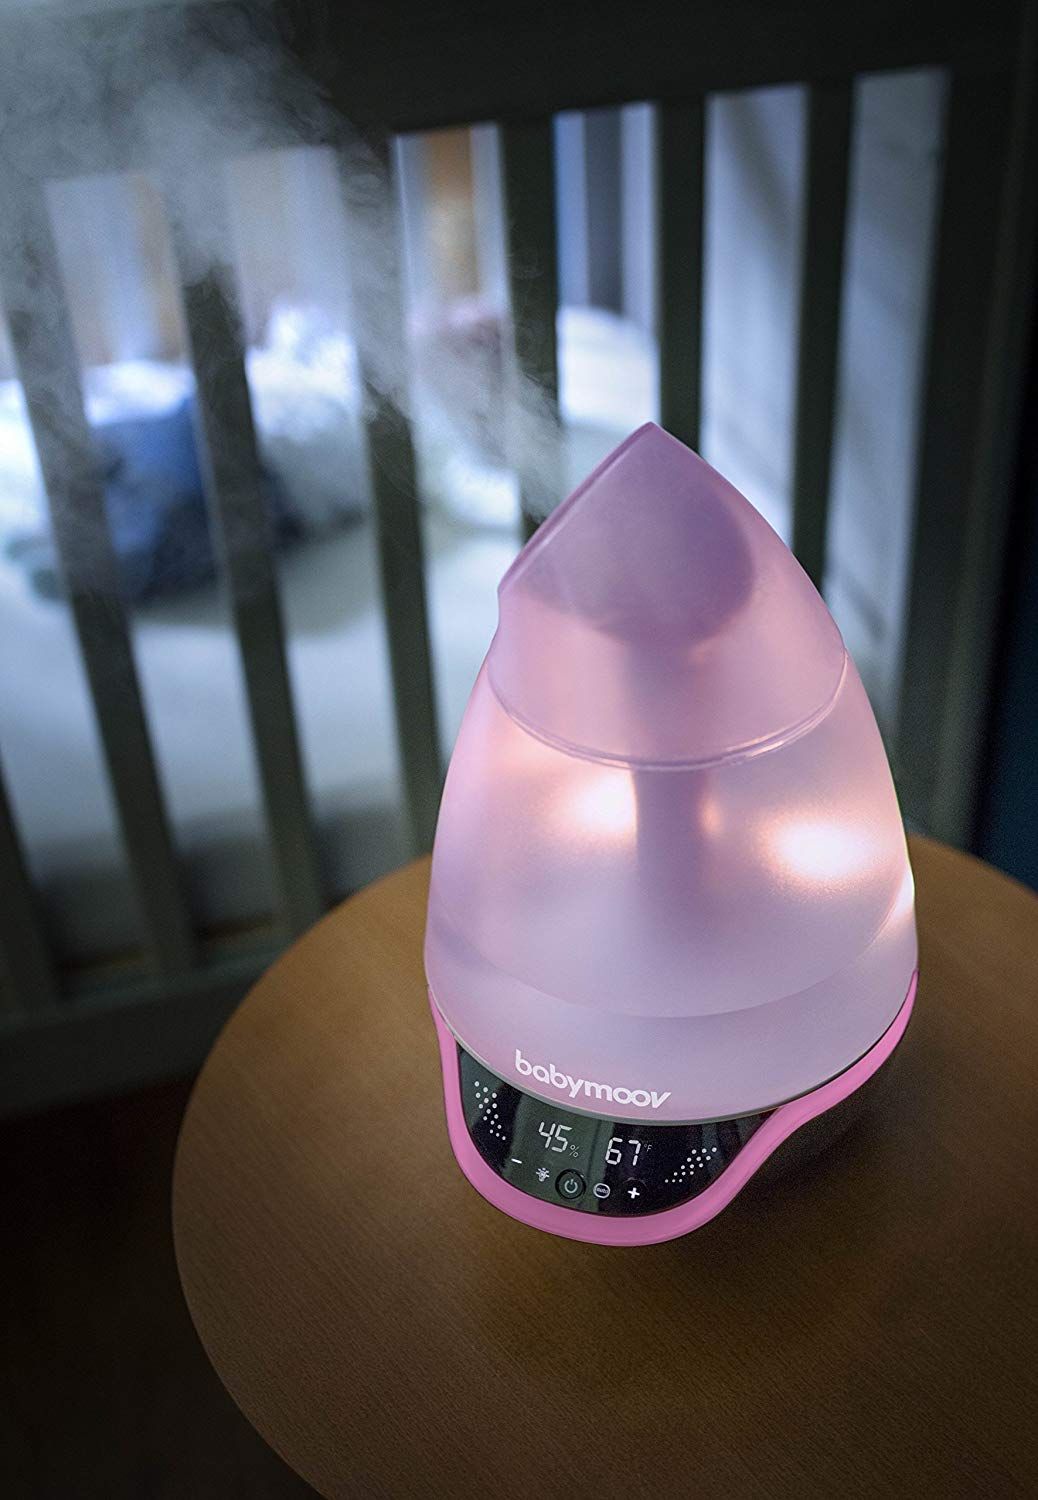  Máy tạo độ ẩm Babymoov 3-in-1 Hygro Plus Cool Mist Humidifier 